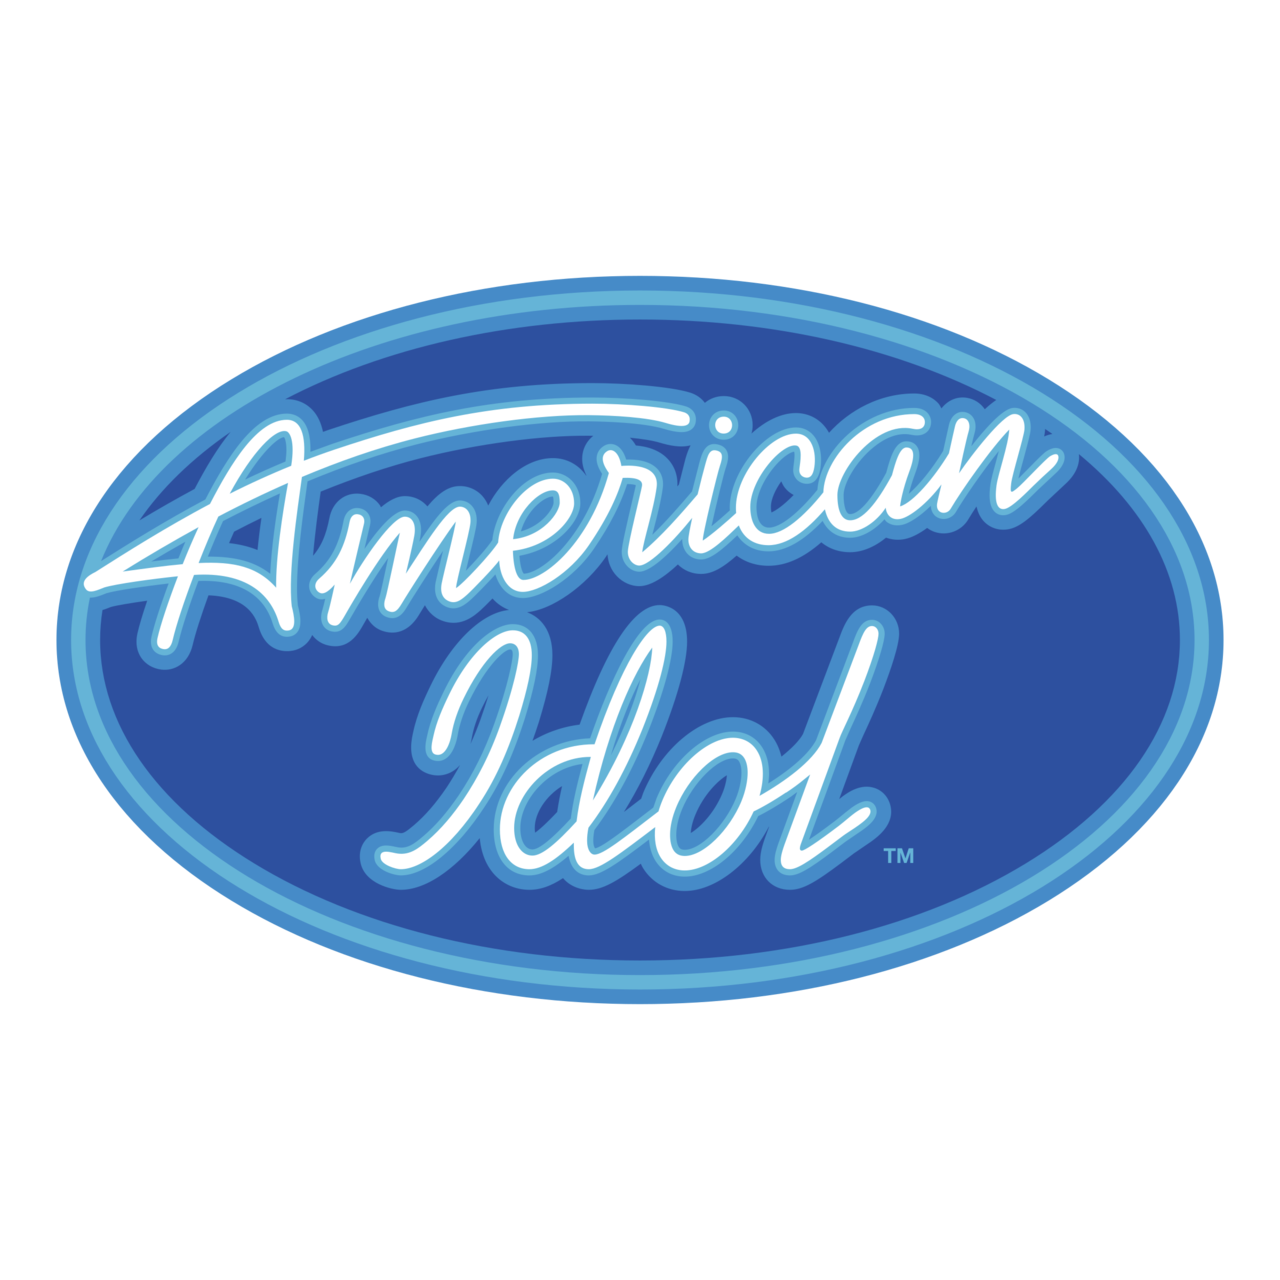 https://martinbriley.com/wp-content/uploads/2021/11/american-idol-logo.png